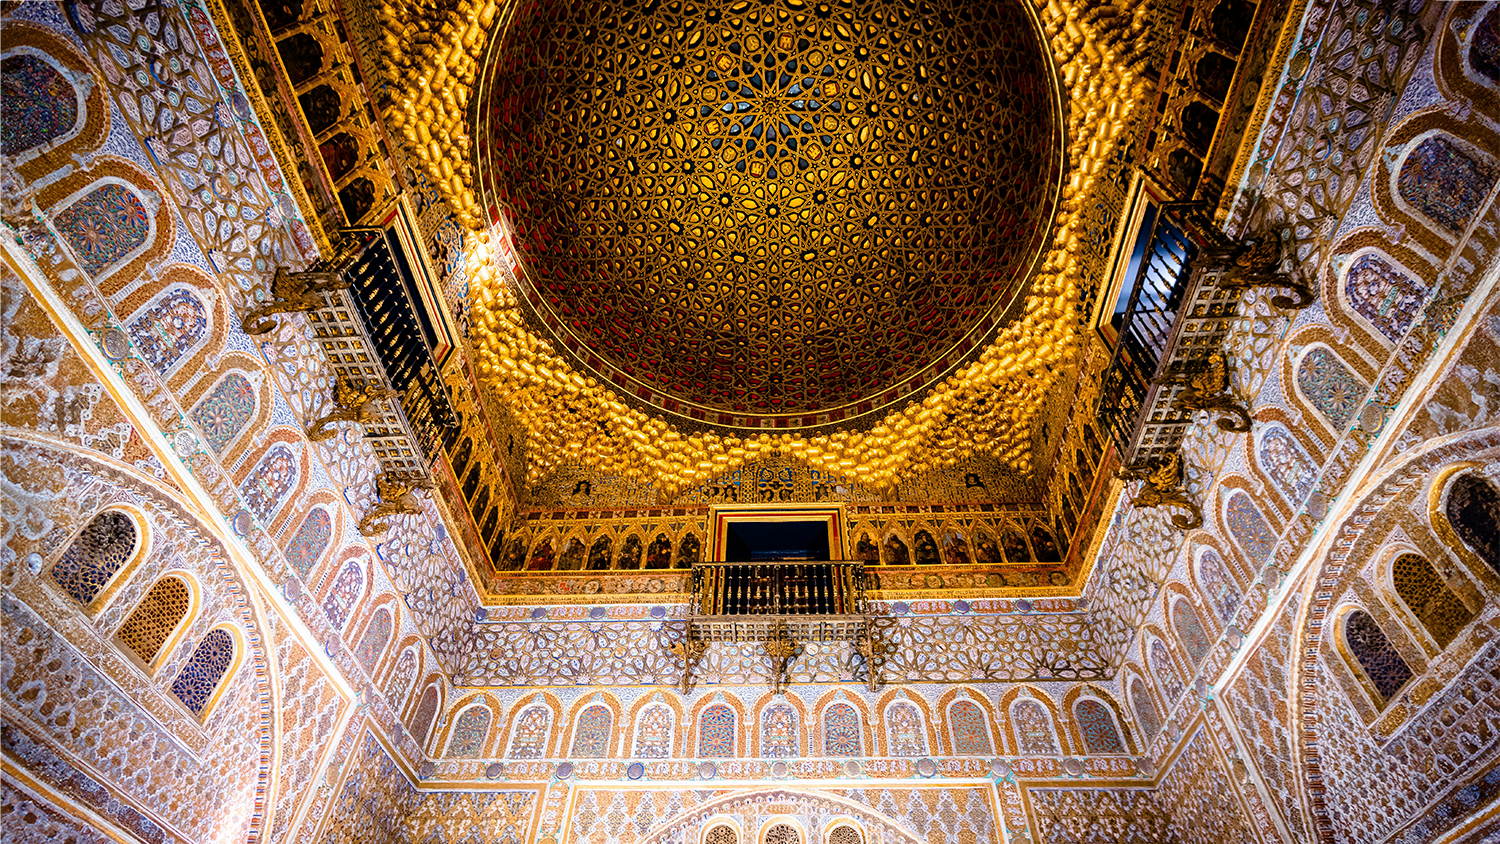 Alcázar of Seville, officially called Royal Alcázar of Seville - a historic royal palace in Seville, Spain.